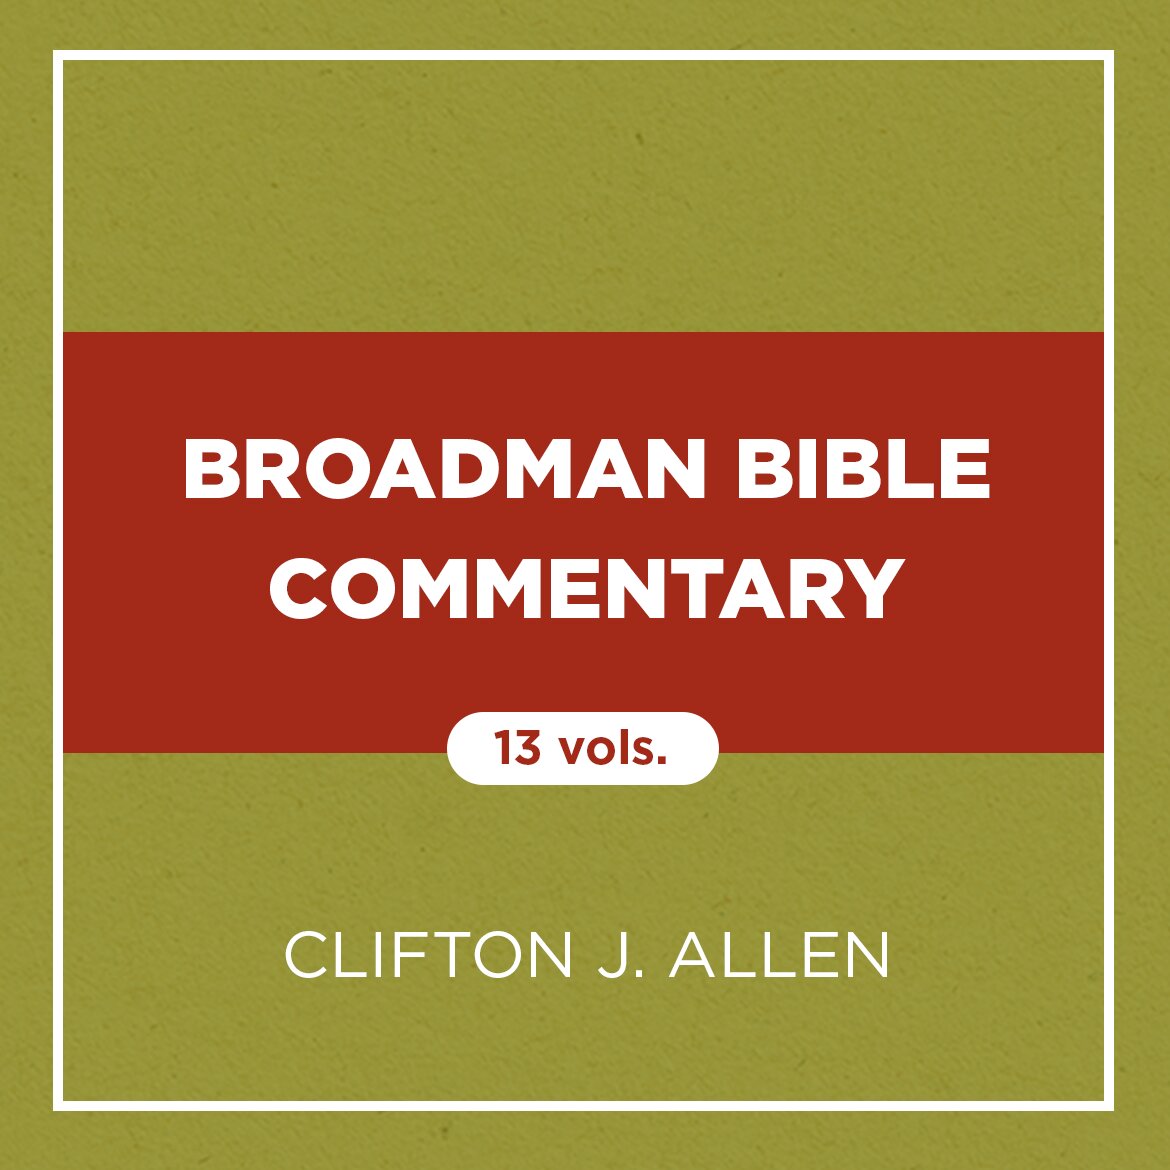 Broadman Bible Commentary (13 vols.)